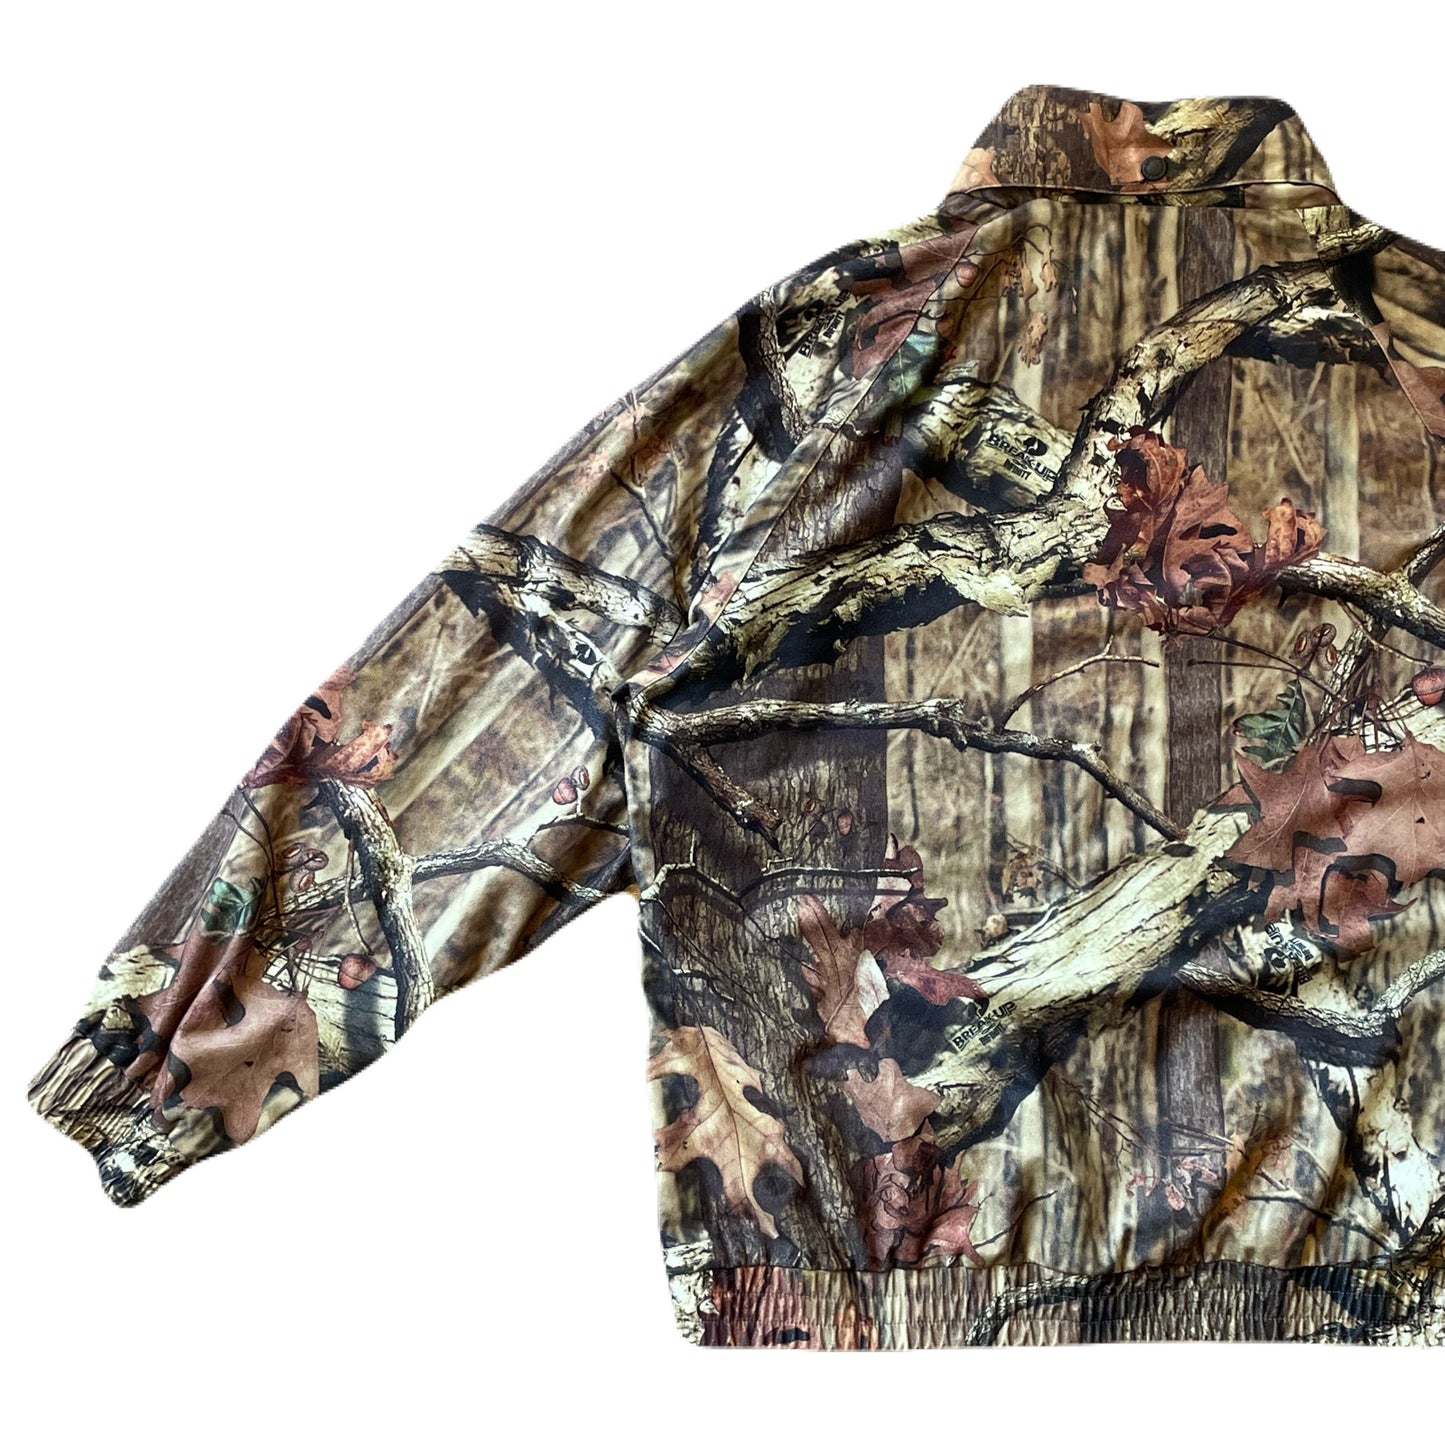 ”Remington" realtree camouflage jacket　XL